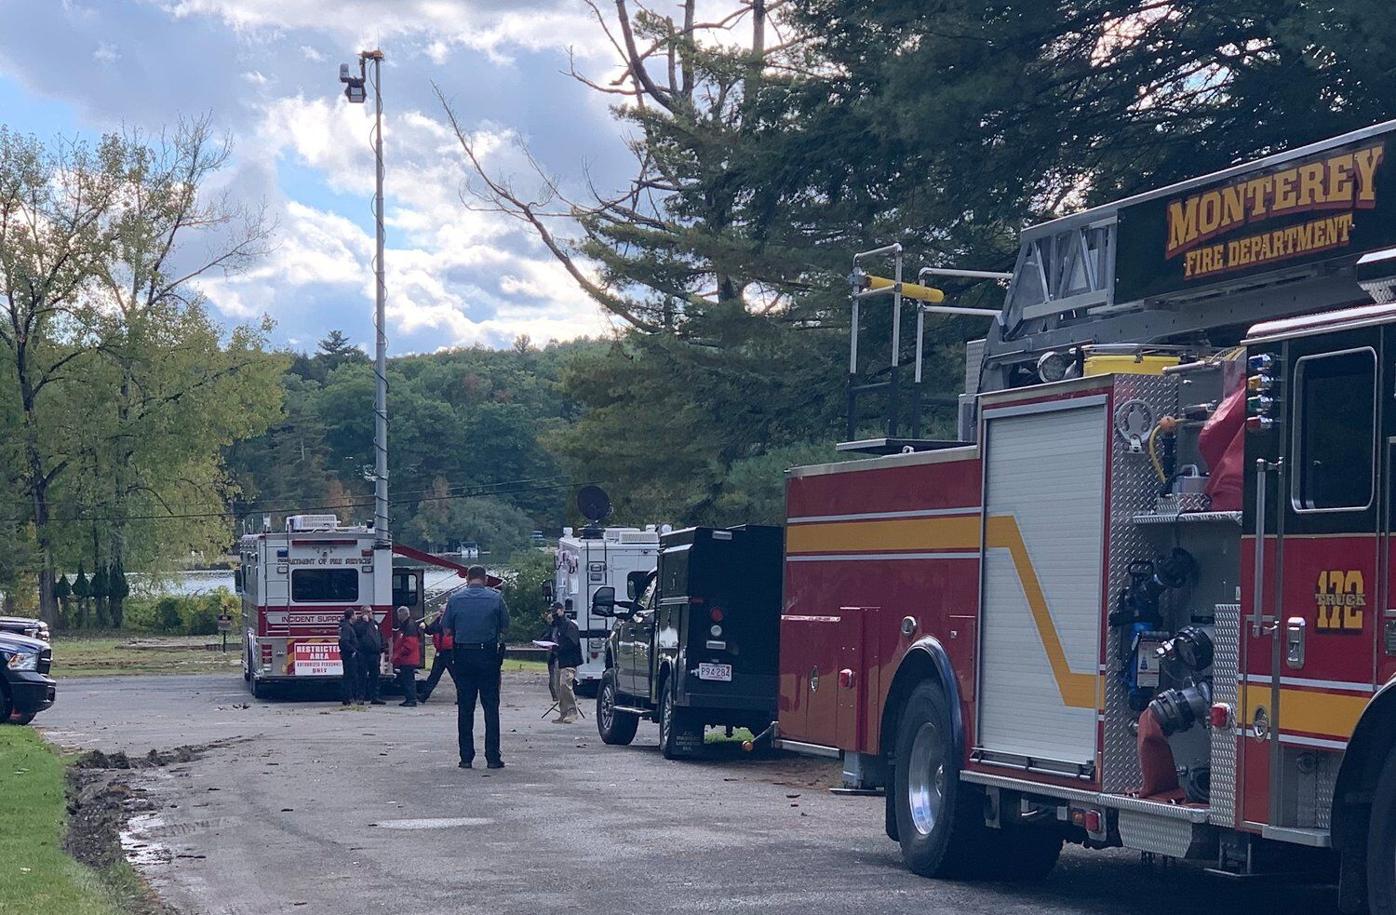 Explosives unit, other responders on scene of Lake Buel neighborhood in Monterey